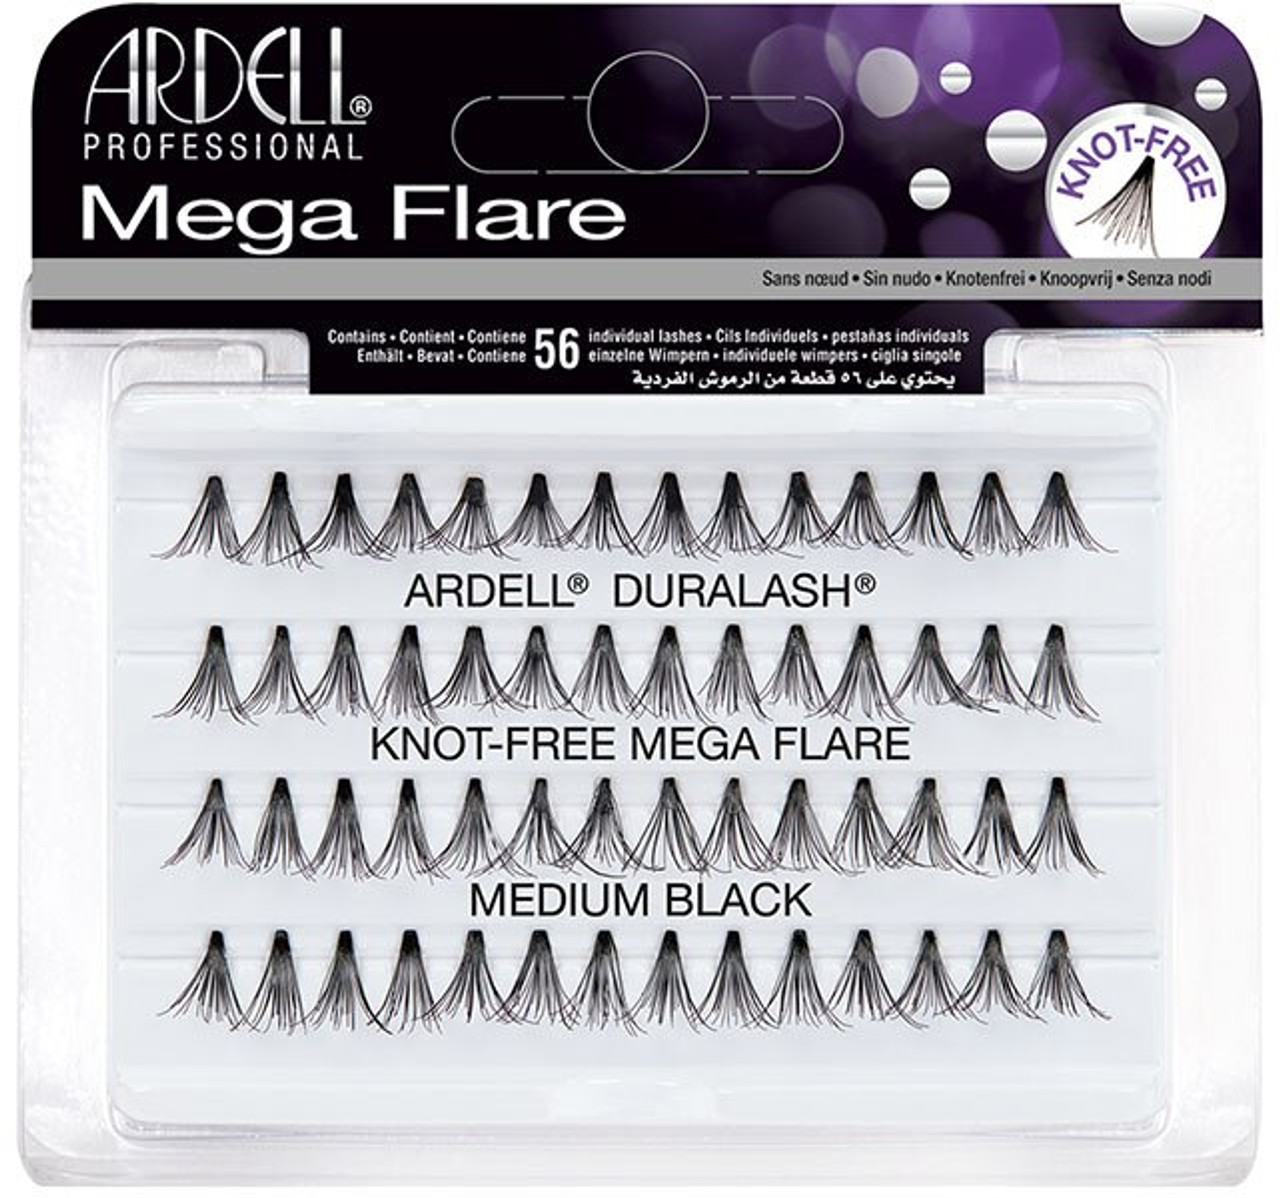 Ardell Duralash Mega Flare - Knot-Free Mega Flare Medium Black